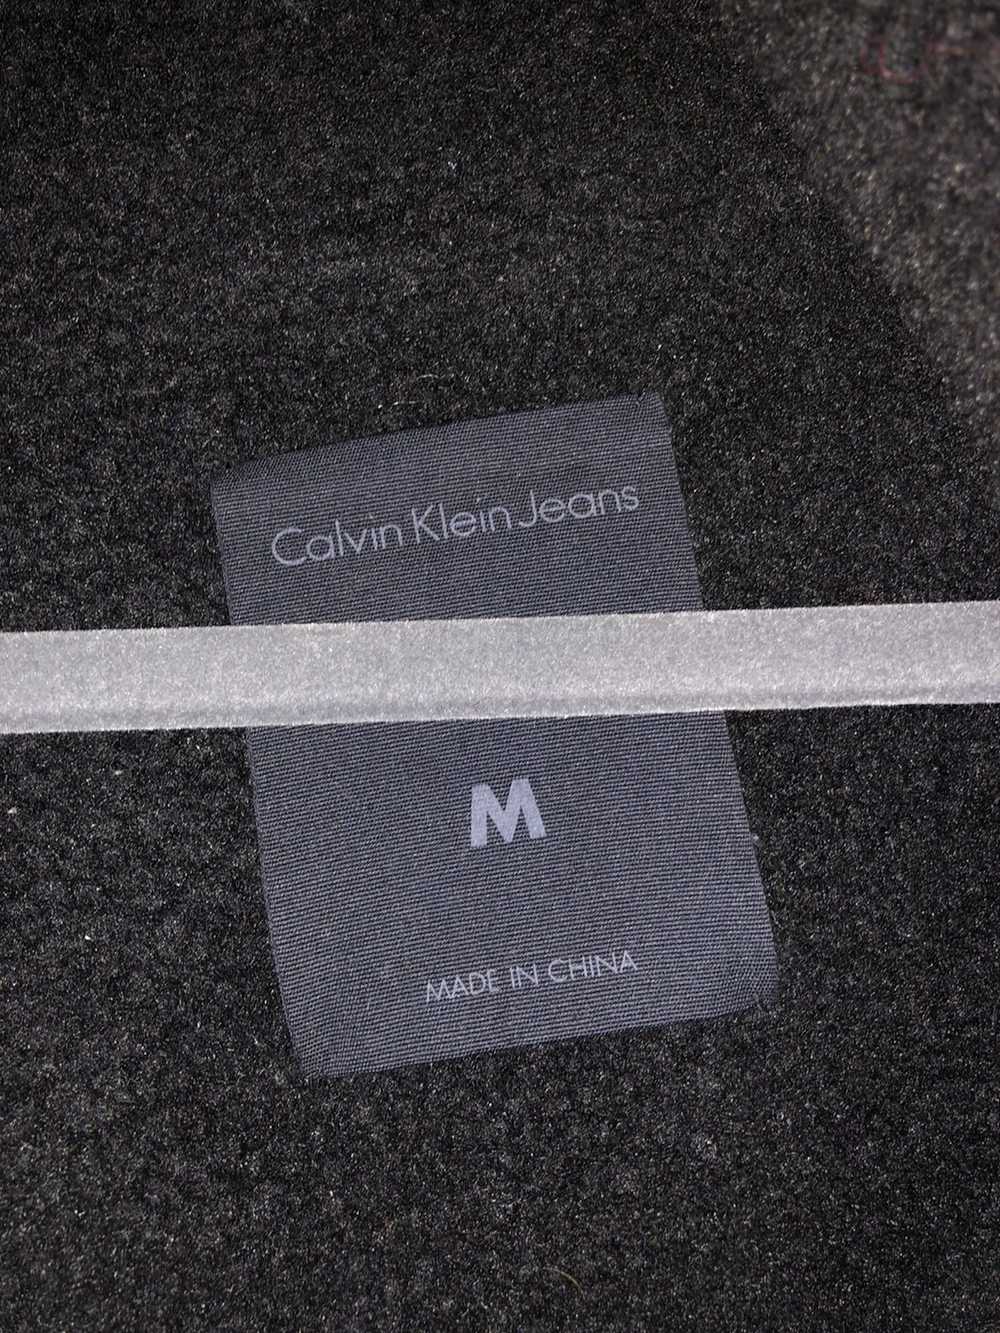 Calvin Klein Calvin Klein Sweater/Cardigan - image 3